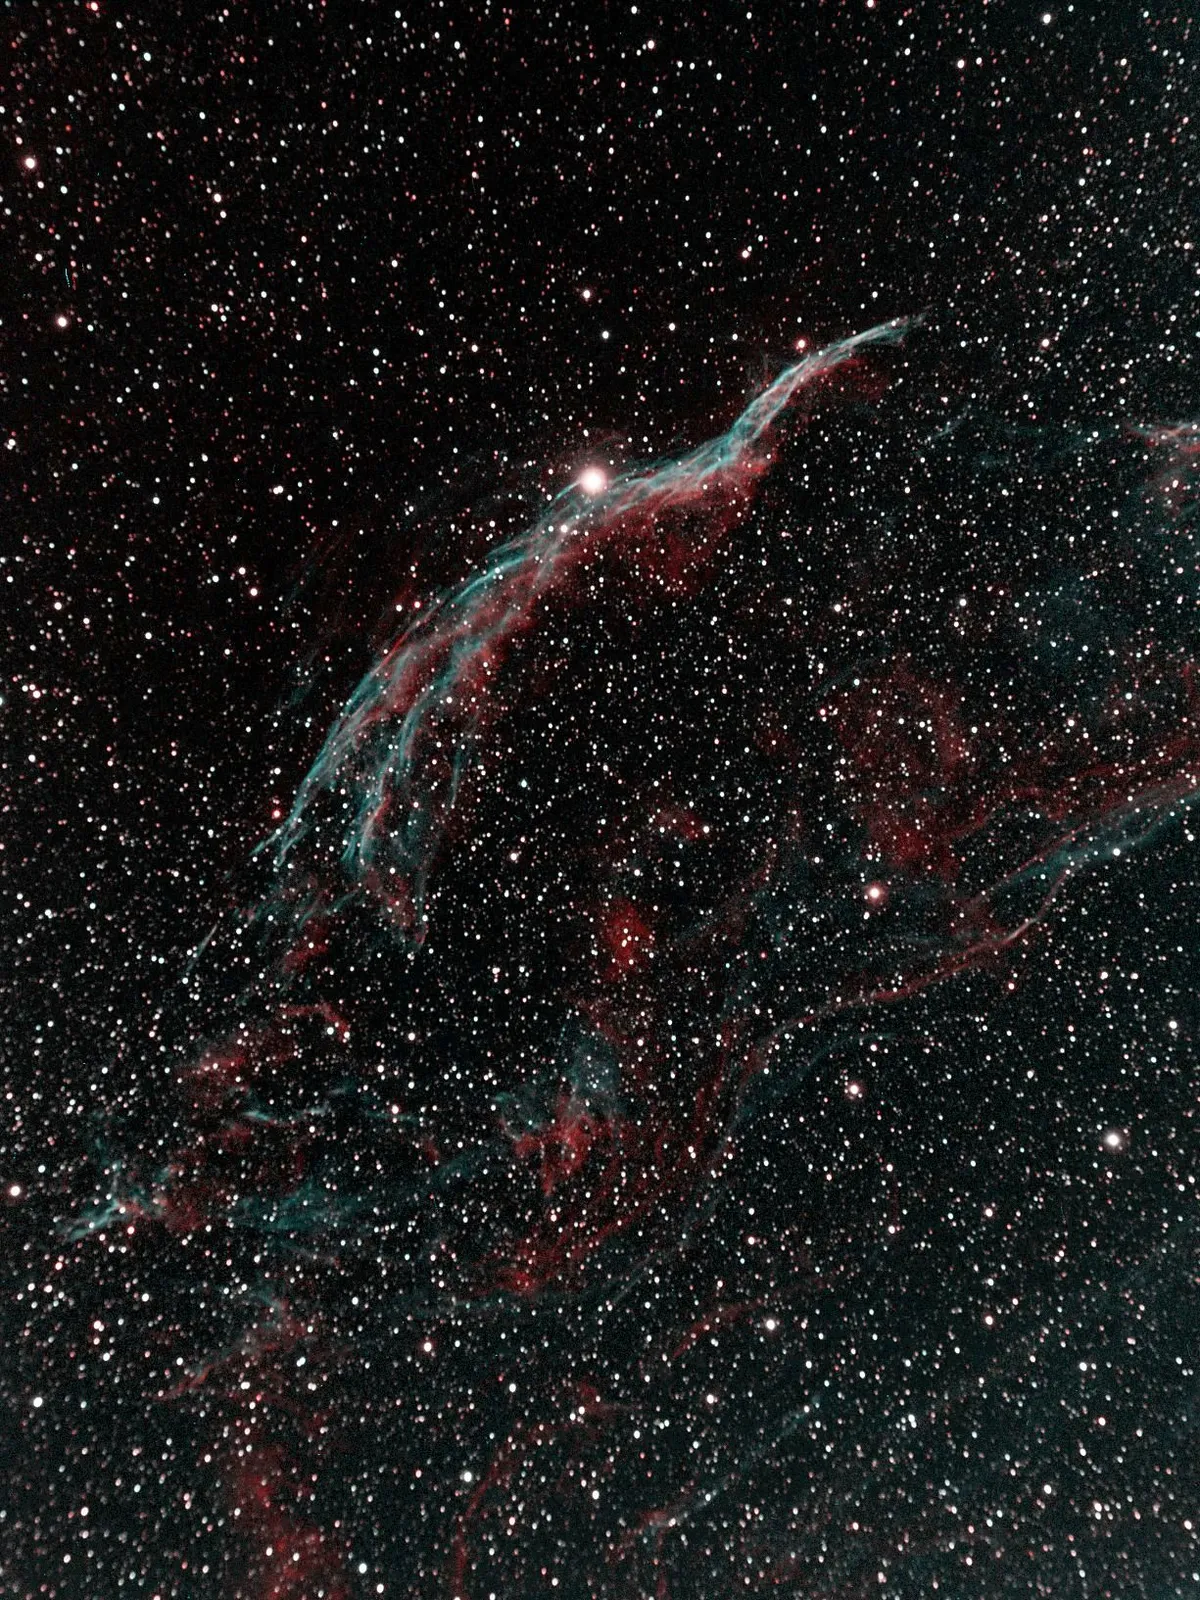 C34 Witch's Broom Veil Nebula by Mark Griffith, Swindon, Wiltshire, UK. Equipment: Skywatcher NEQ6 pro mount & Equinox 80mm refractor, Atik 383L  camera, motorised filter wheel and Astronomik Ha Oiii filters.